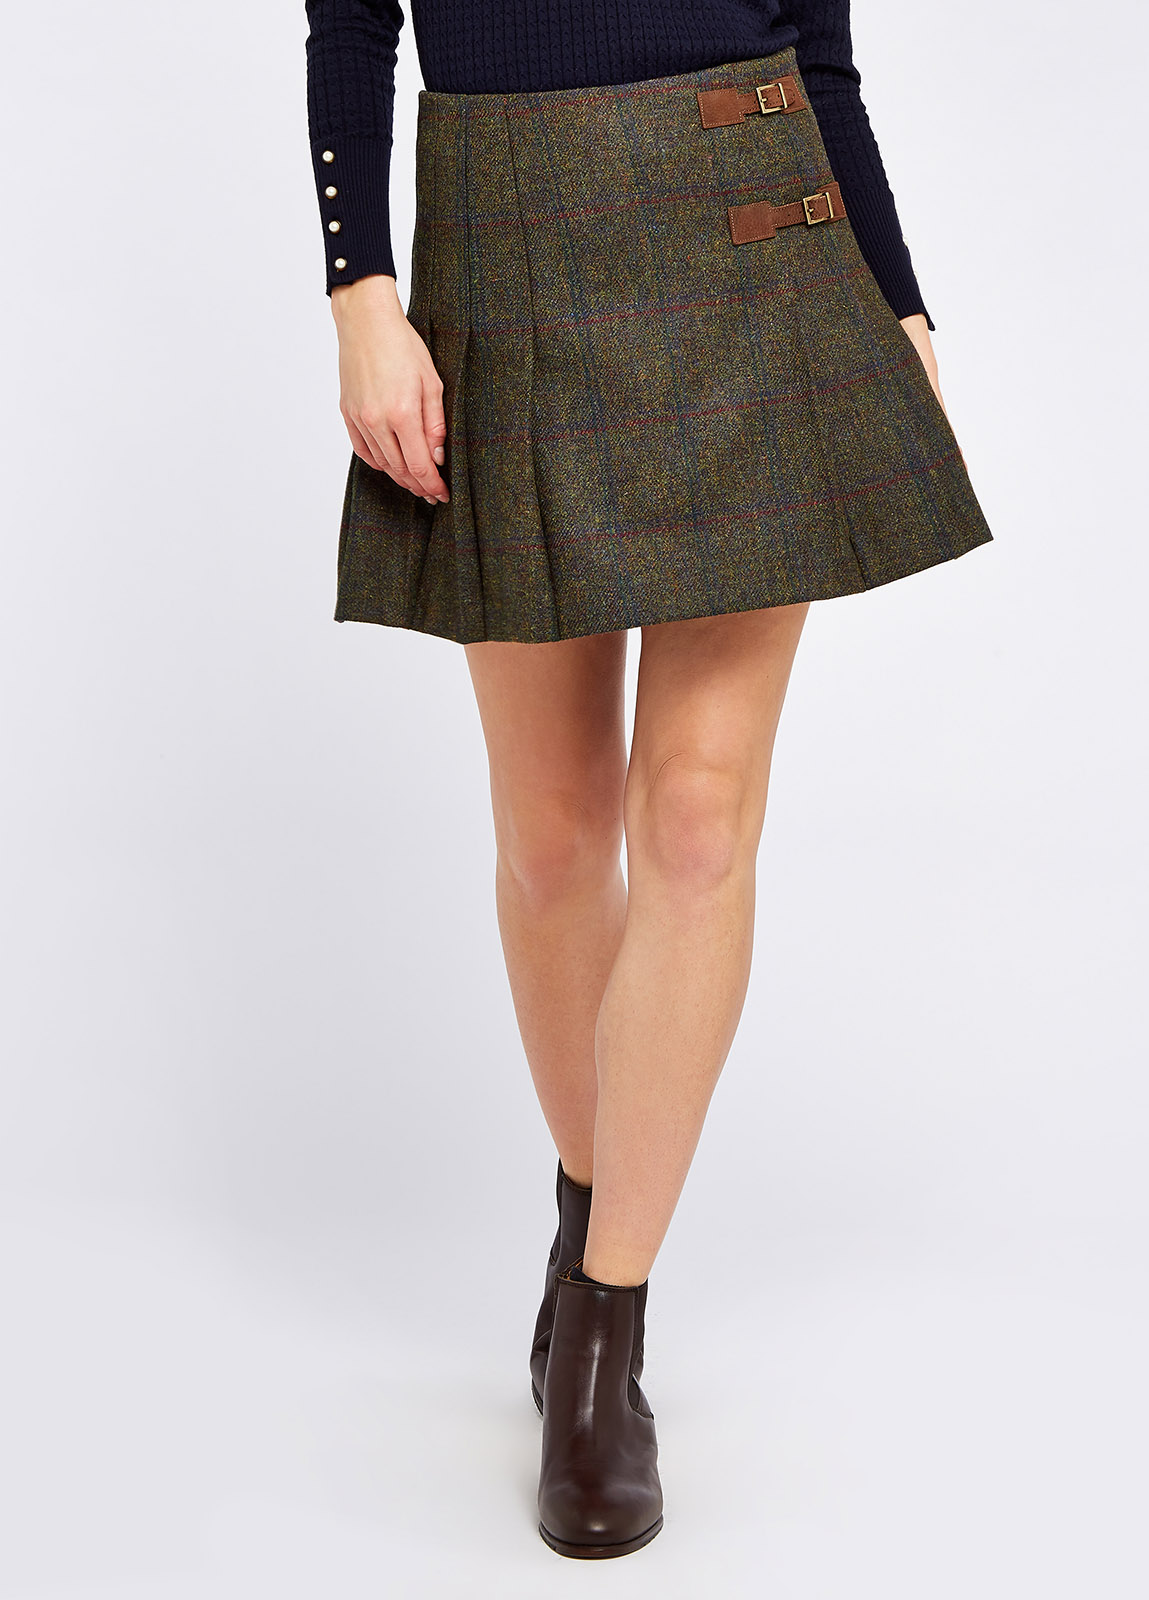 Blossom Tweed Skirt - Hemlock